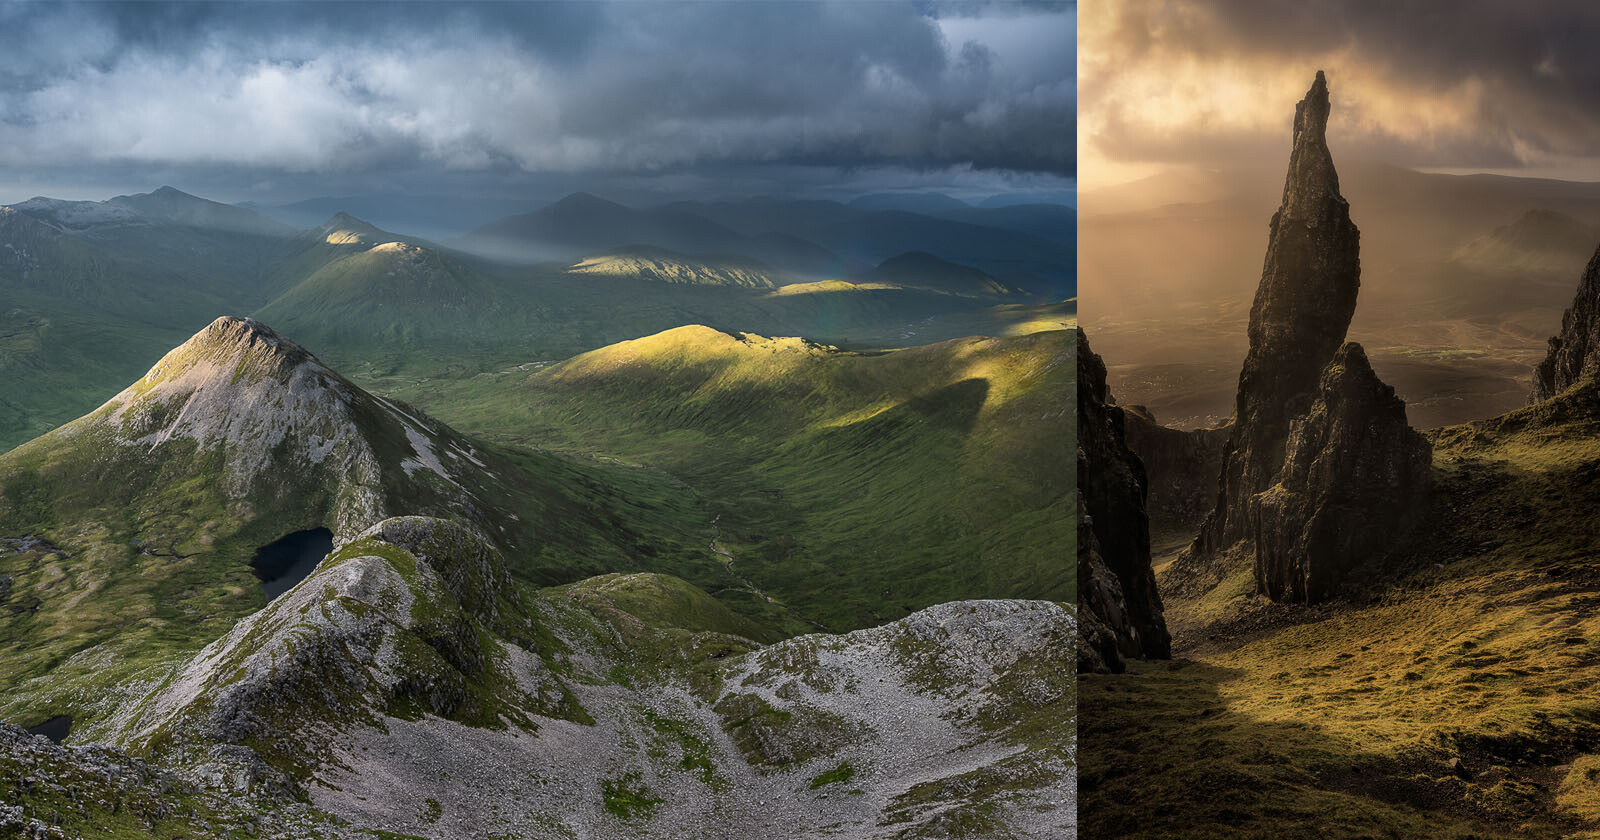  landscape photo competition celebrates rugged beauty scotland 